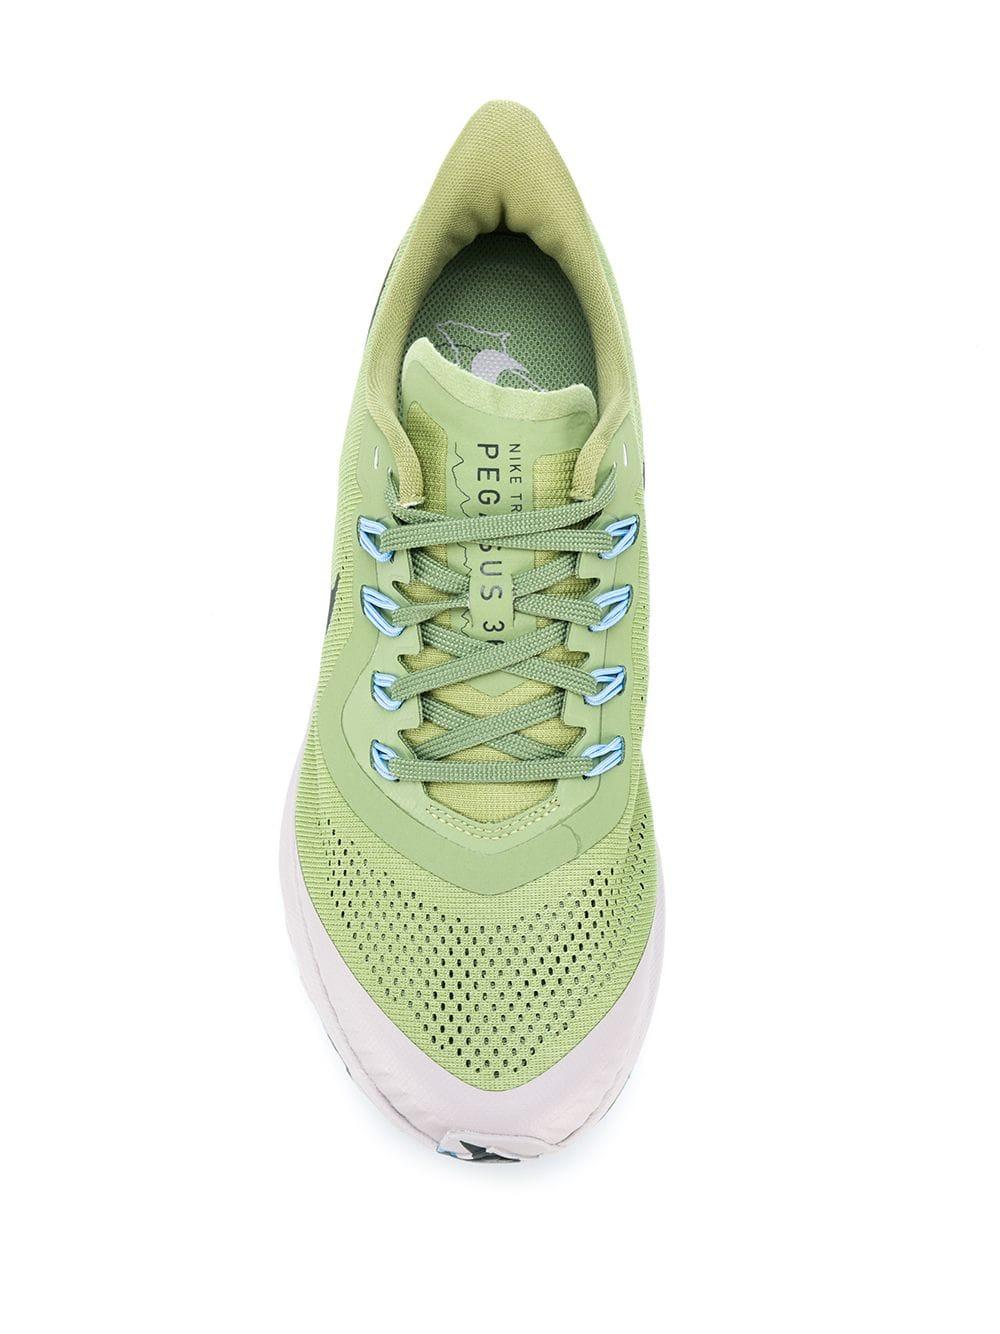 Nike Rubber Pegasus Trail Sneakers in Green for Men - Lyst